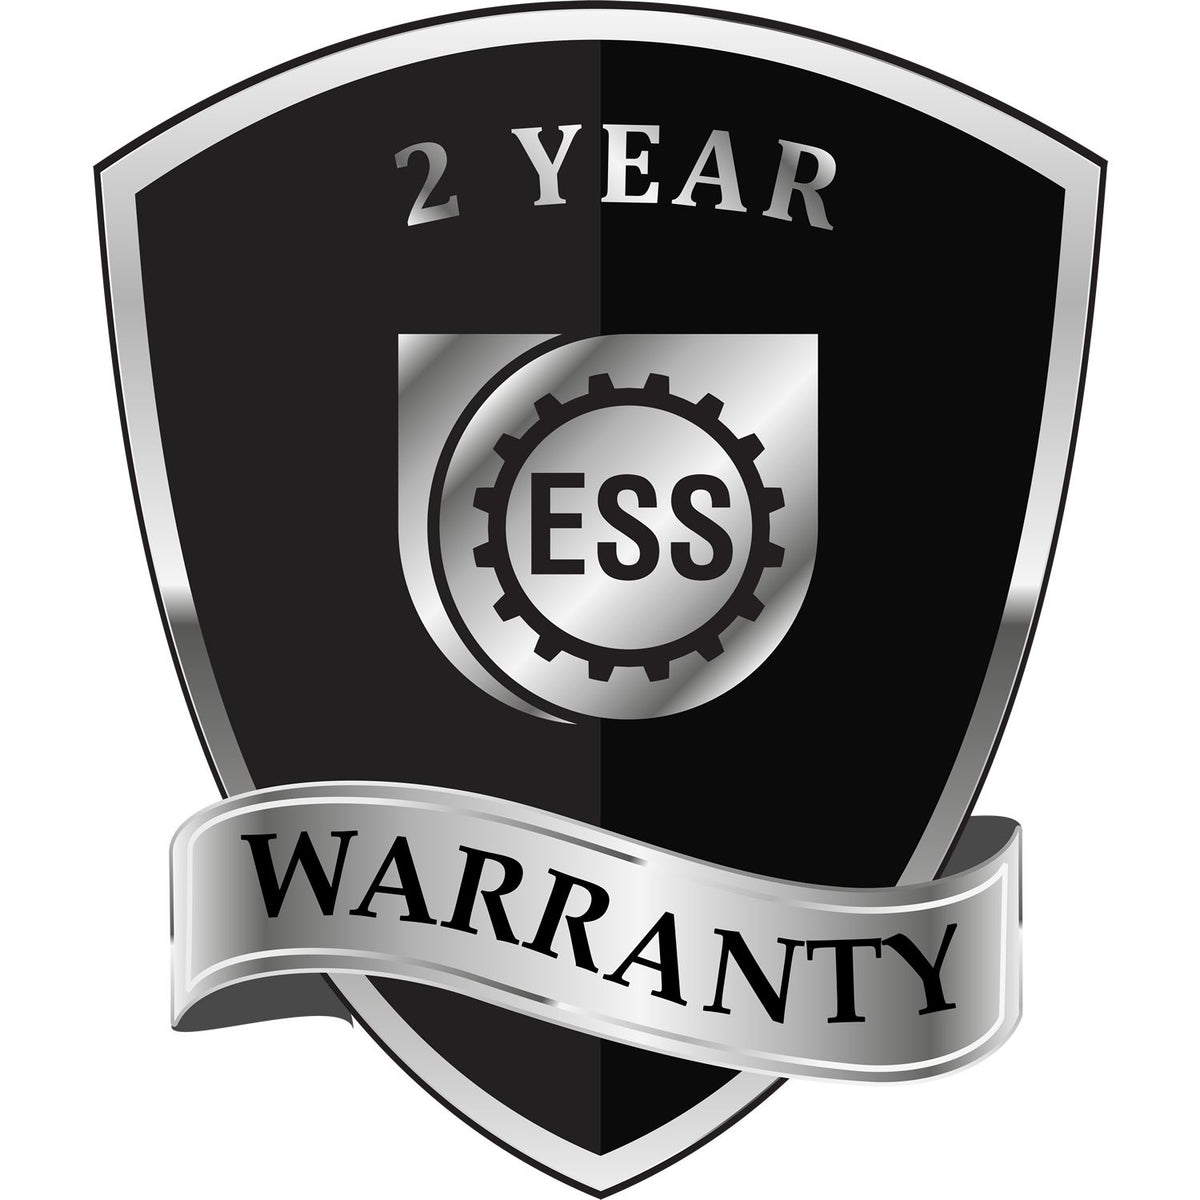 A black and silver badge or emblem showing warranty information for the Handheld Virginia Professional Geologist Embosser